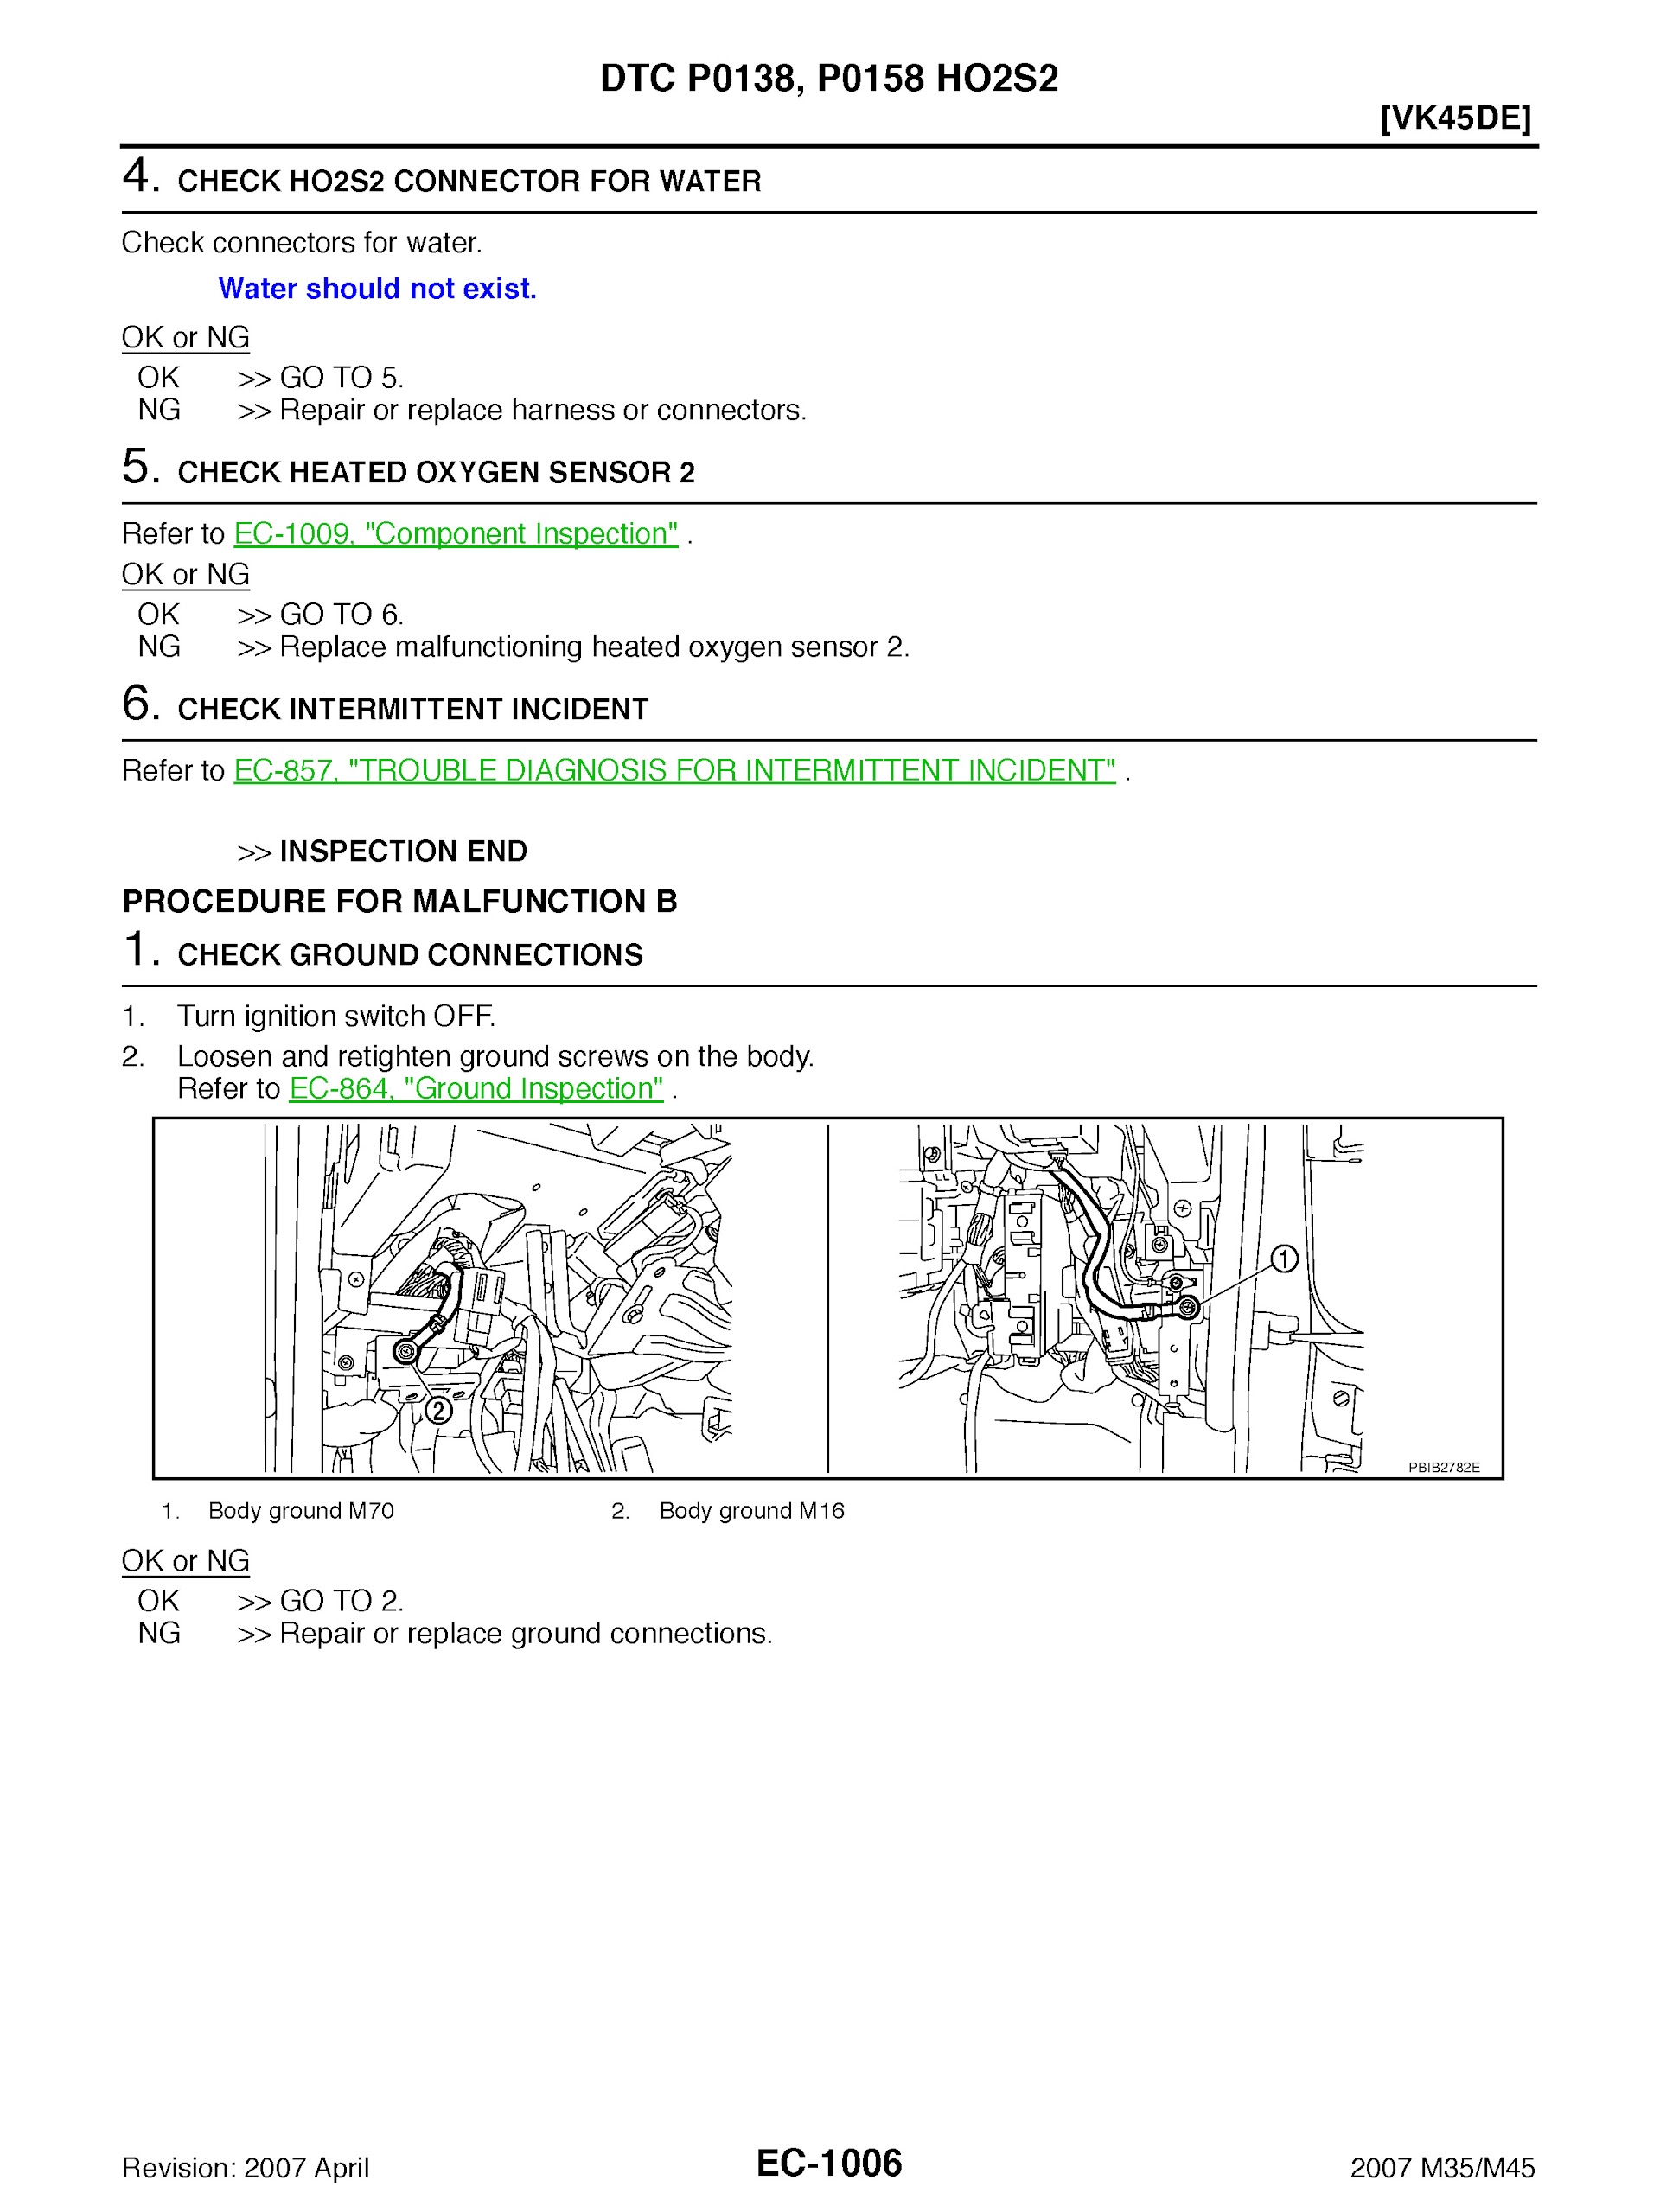 2003-2007 Infiniti Repair Manual M45 M35 DTC